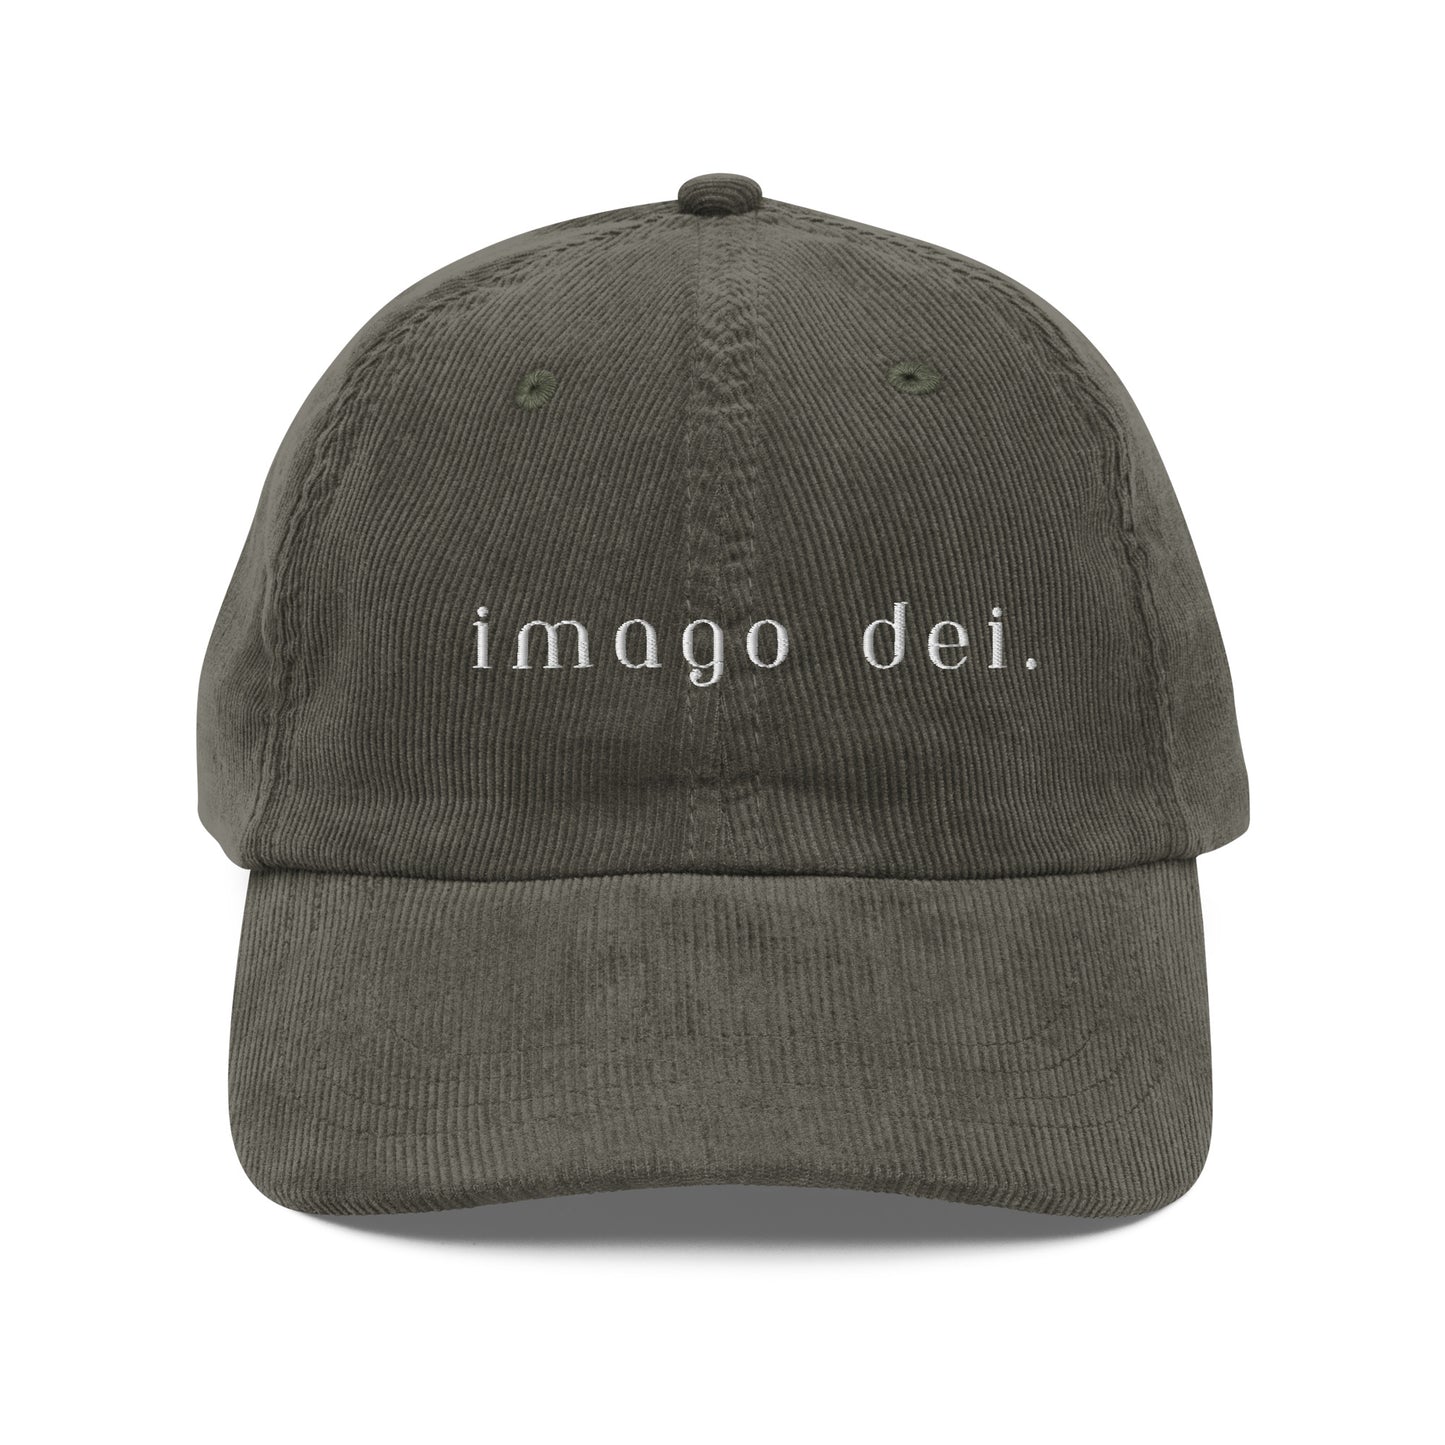 Imago Dei - Vintage corduroy Hat